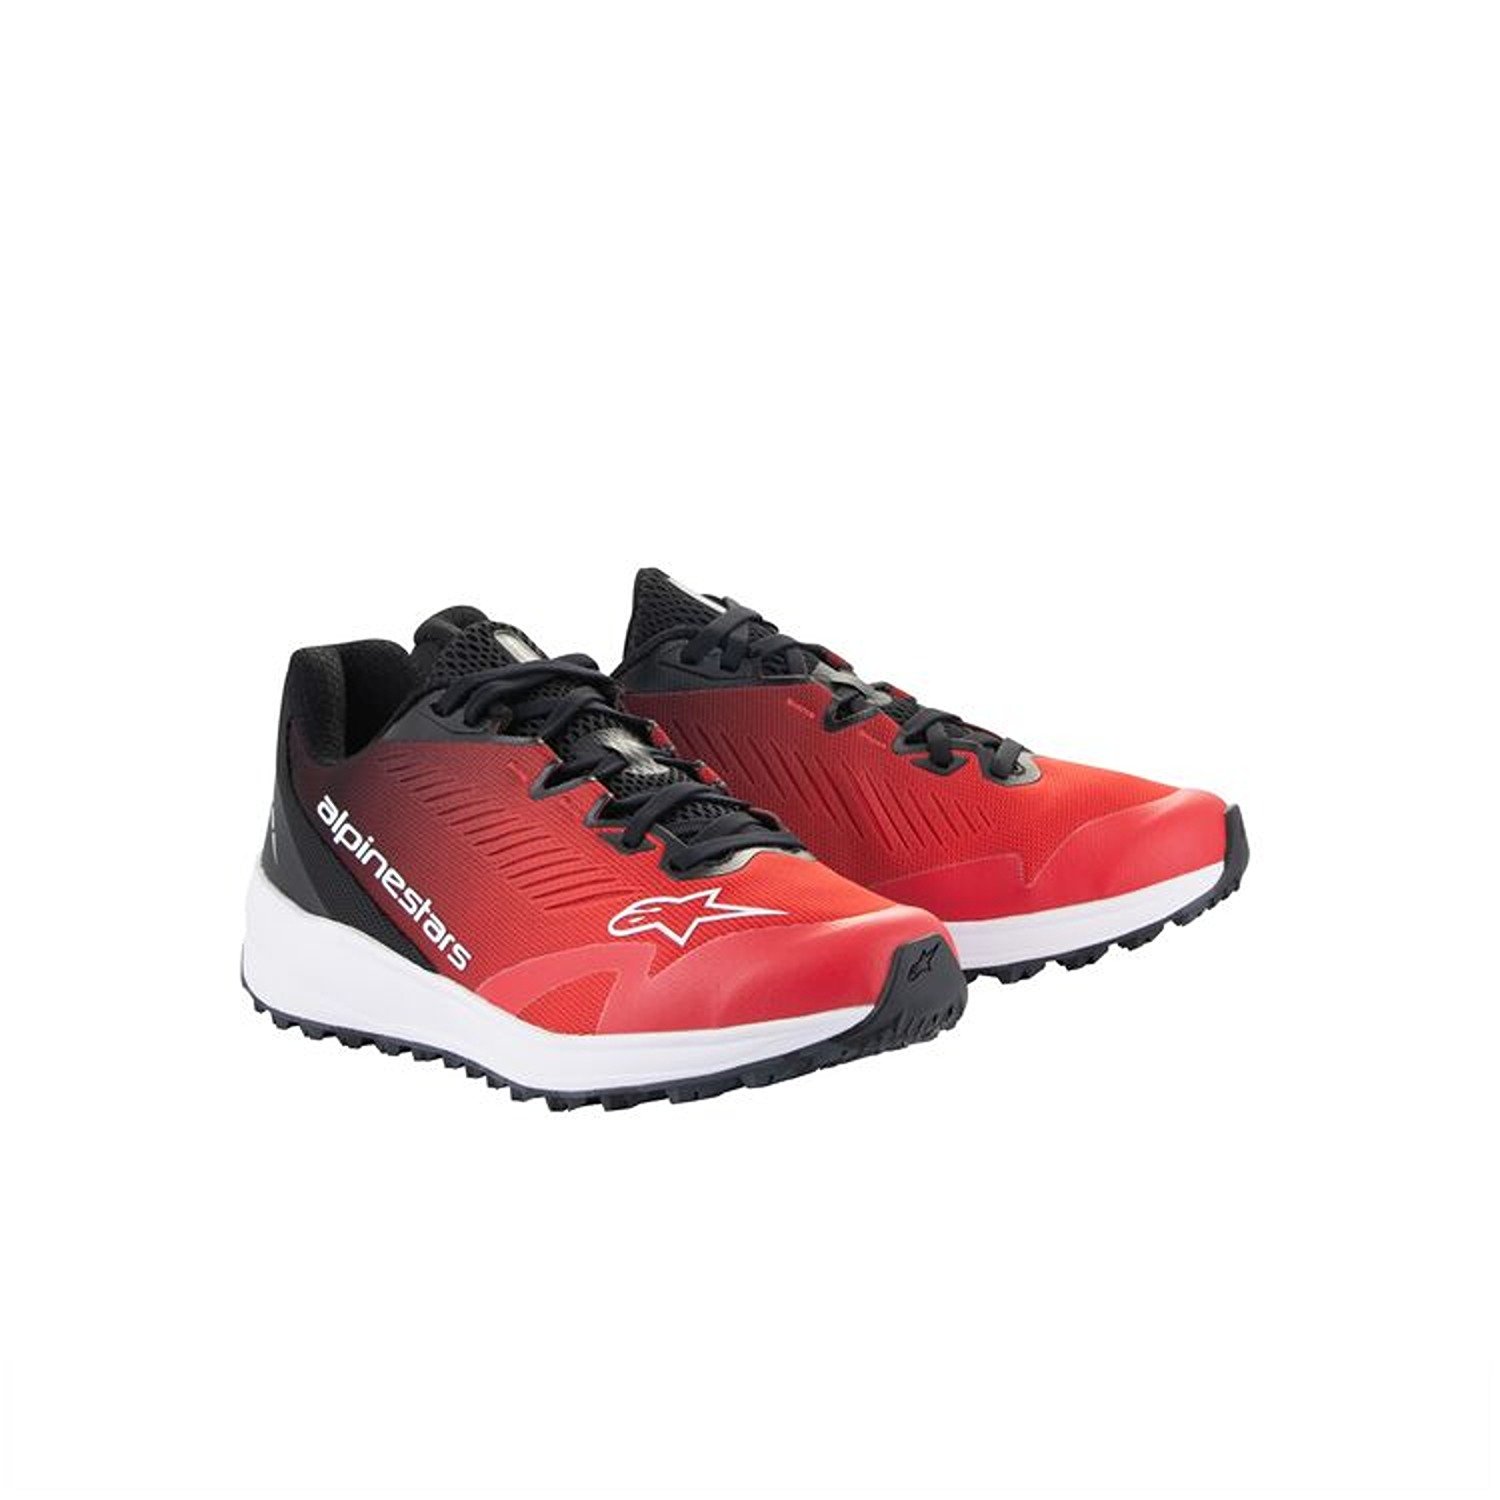 Image of Alpinestars Meta Road V2 Shoes Red Black White Size US 8 EN